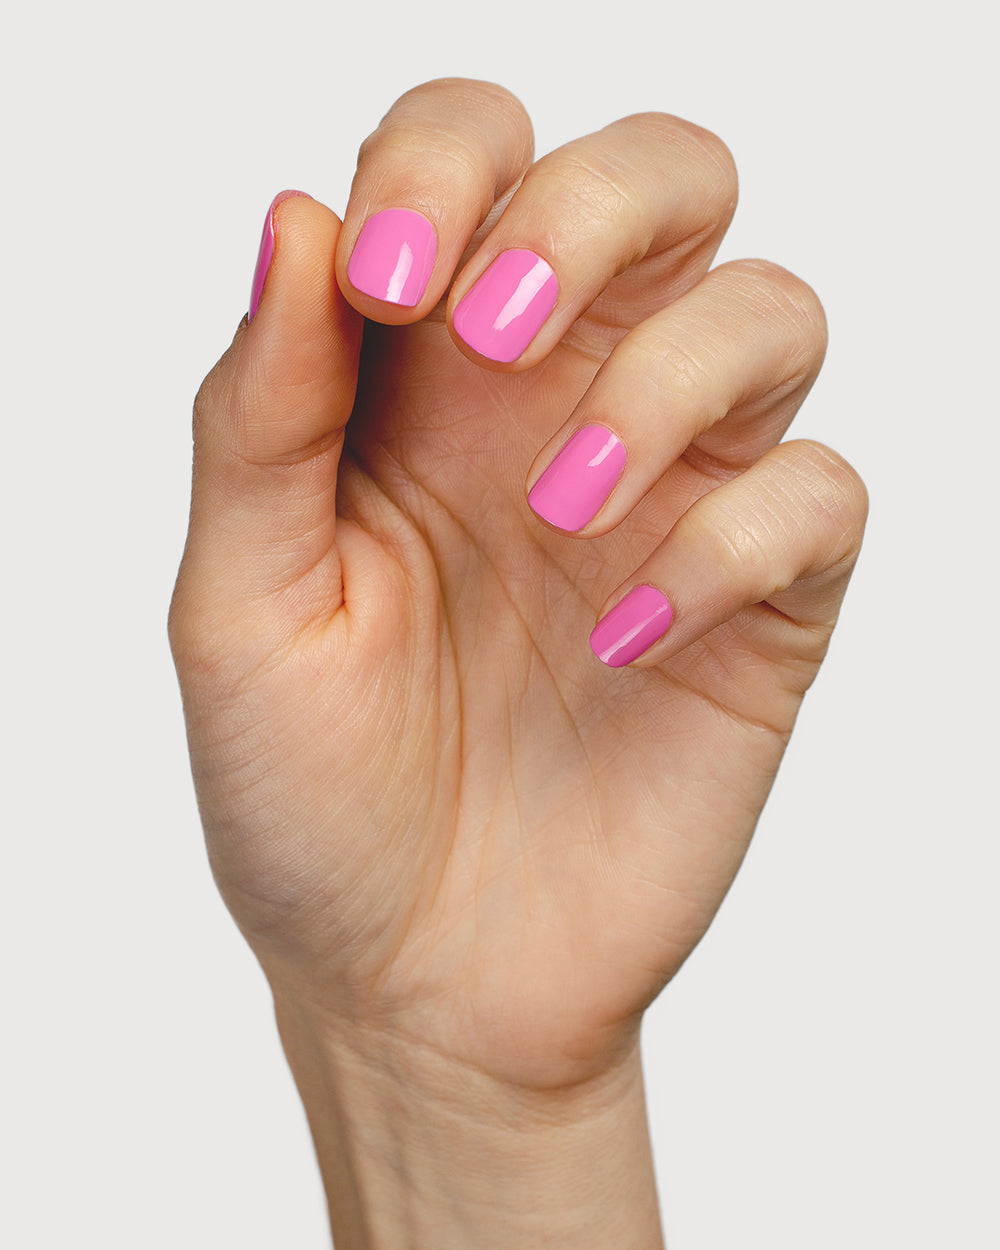 Bright mid-tone fuchsia nail polish hand swatch on fair skin tone